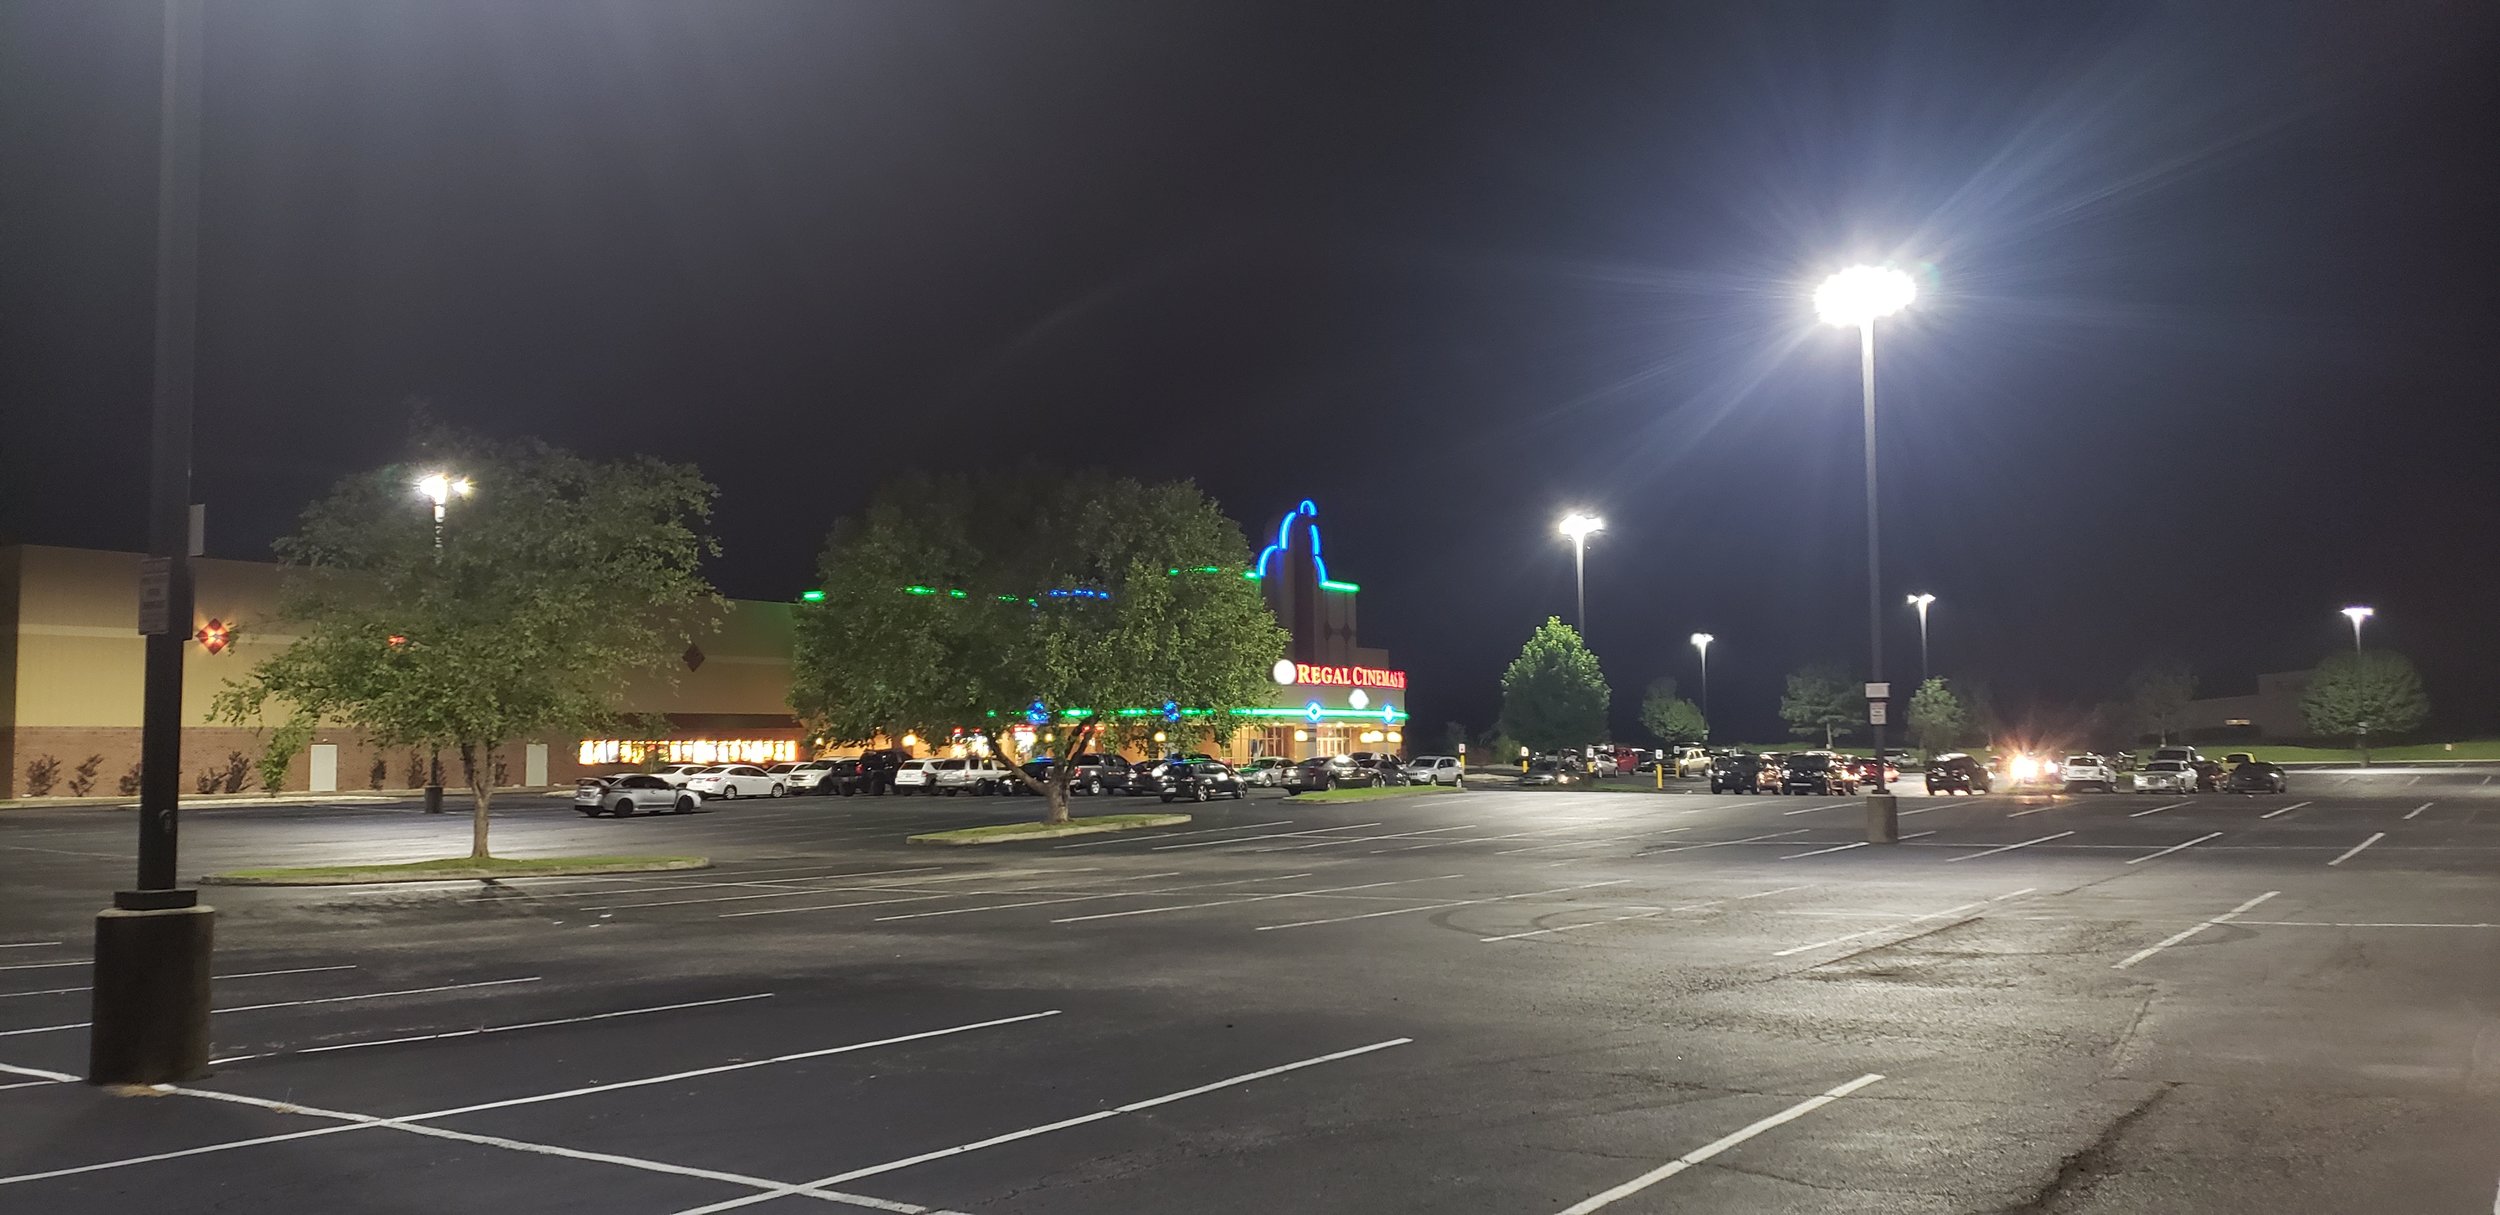 Regal Cinema (Parking Lot Lights)